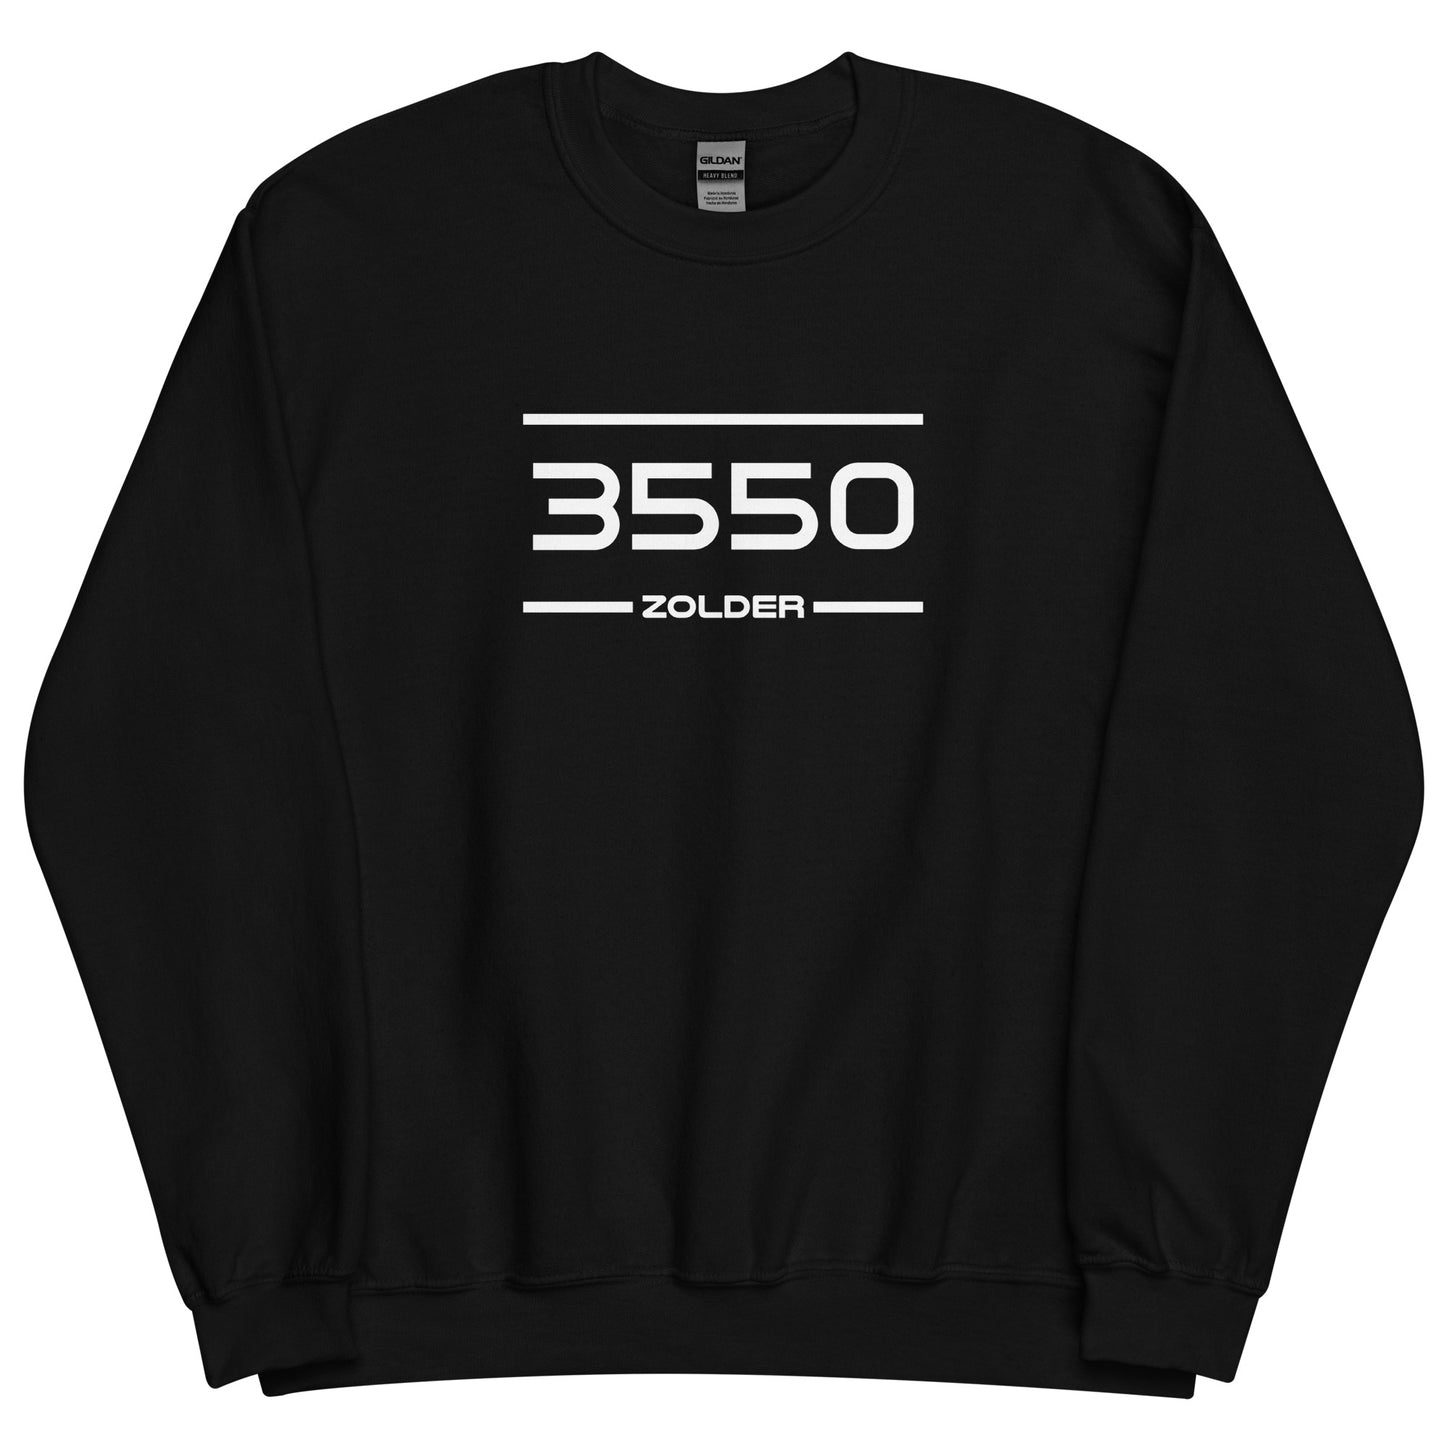 Sweater - 3550 - Zolder (M/V)